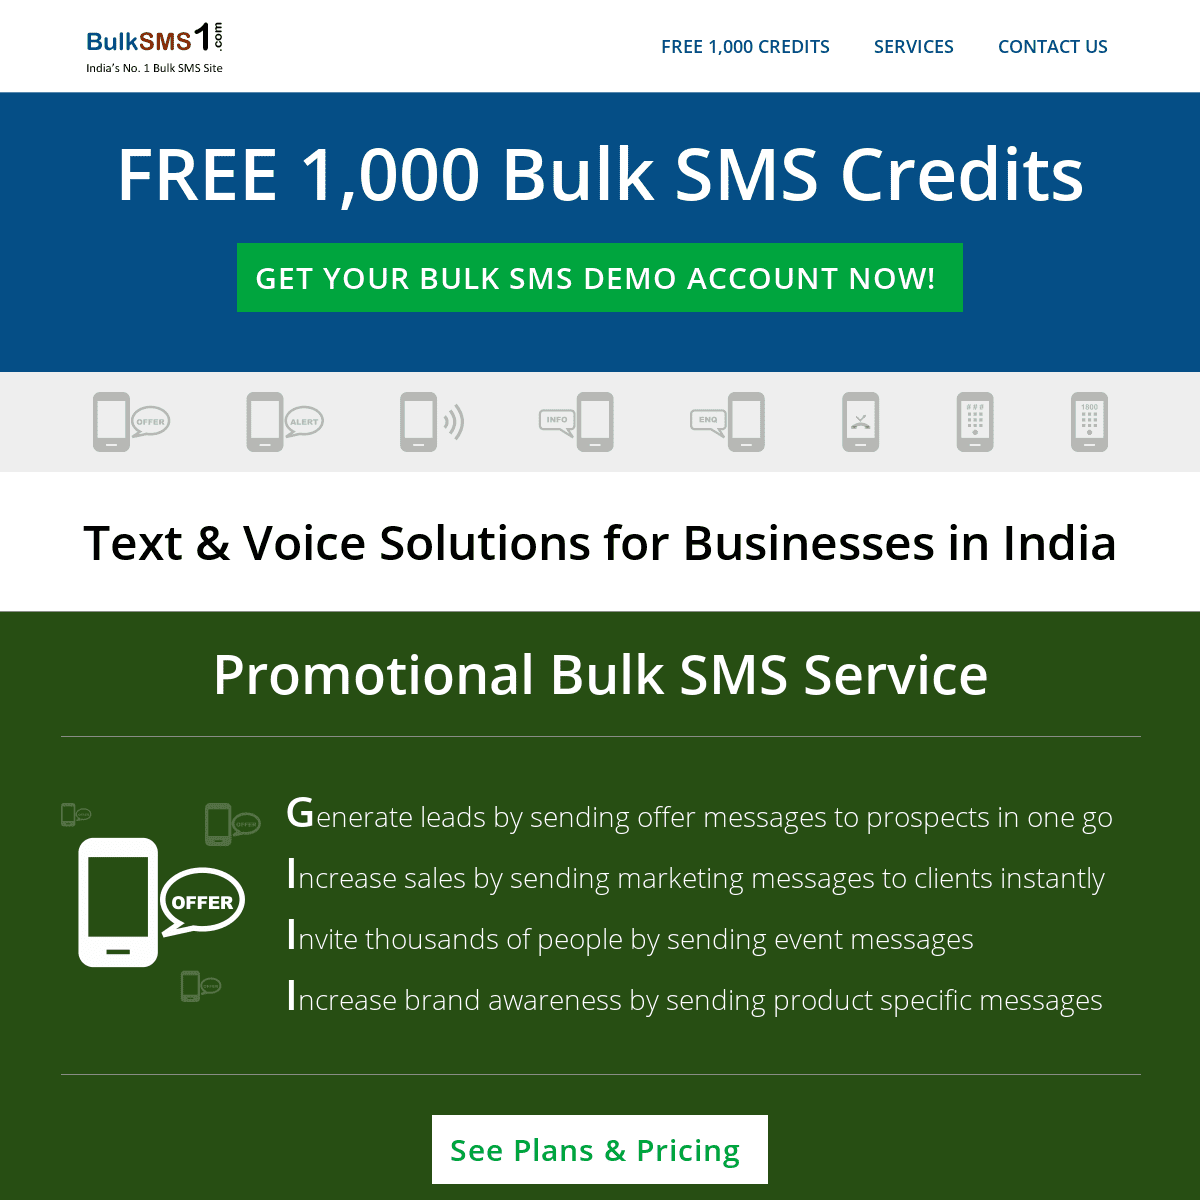 Bulk SMS Service - FREE 1,000 Bulk SMS Credits